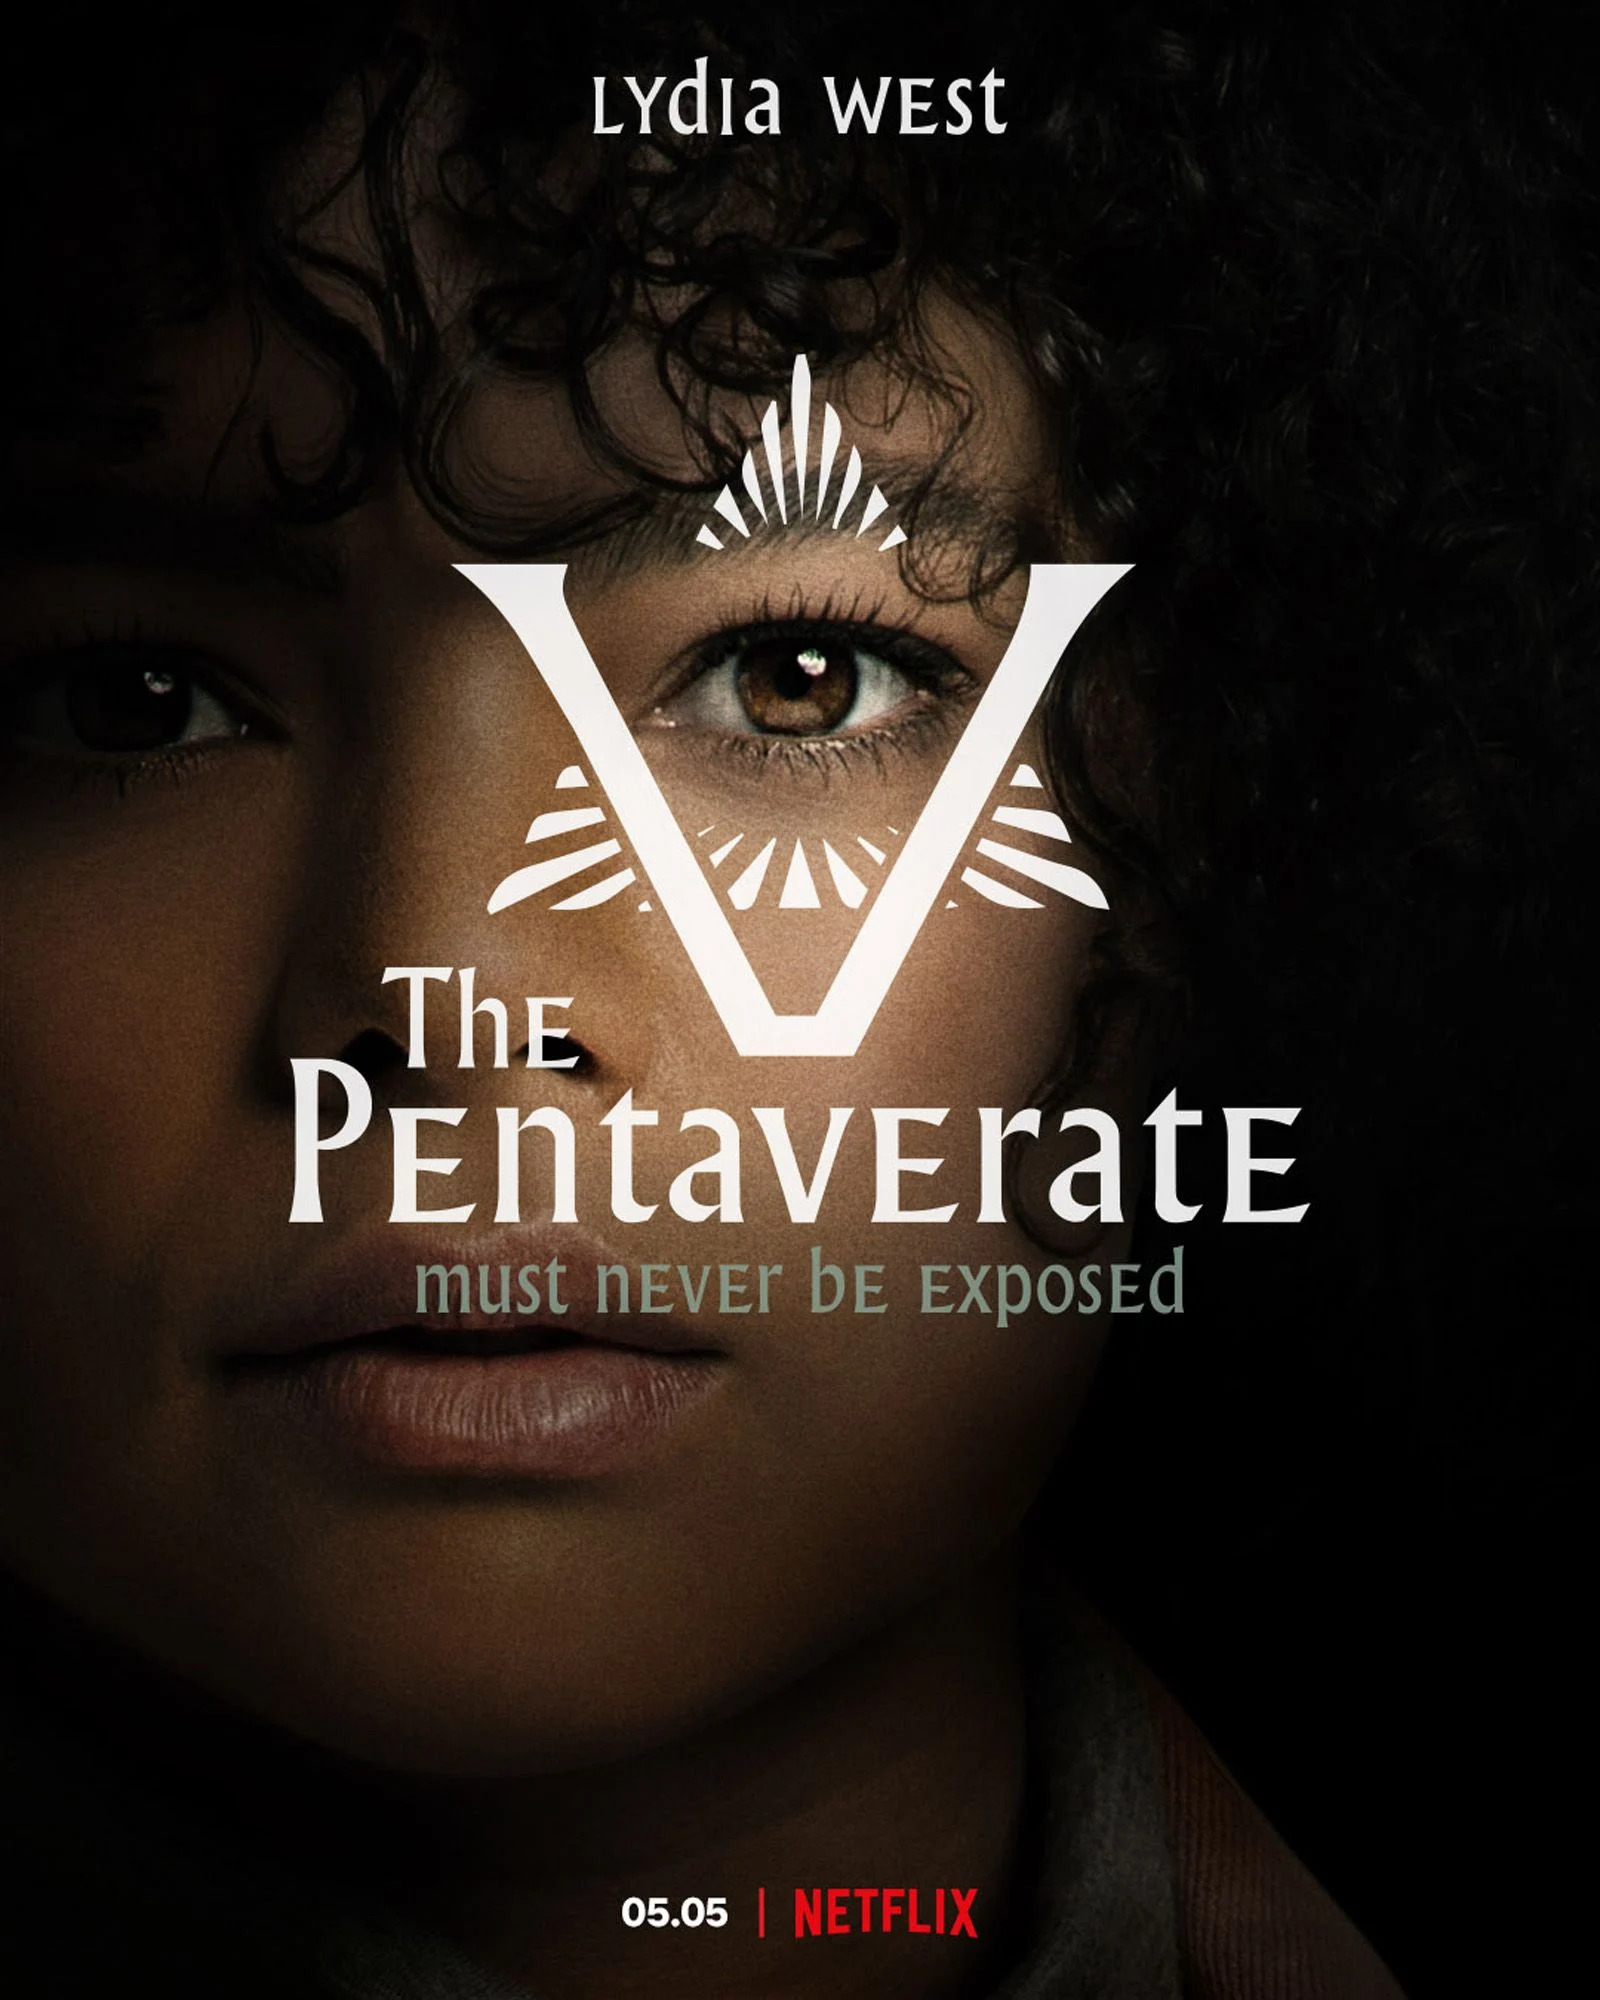 1st Trailer For Netflix Original Series 'The Pentaverate'